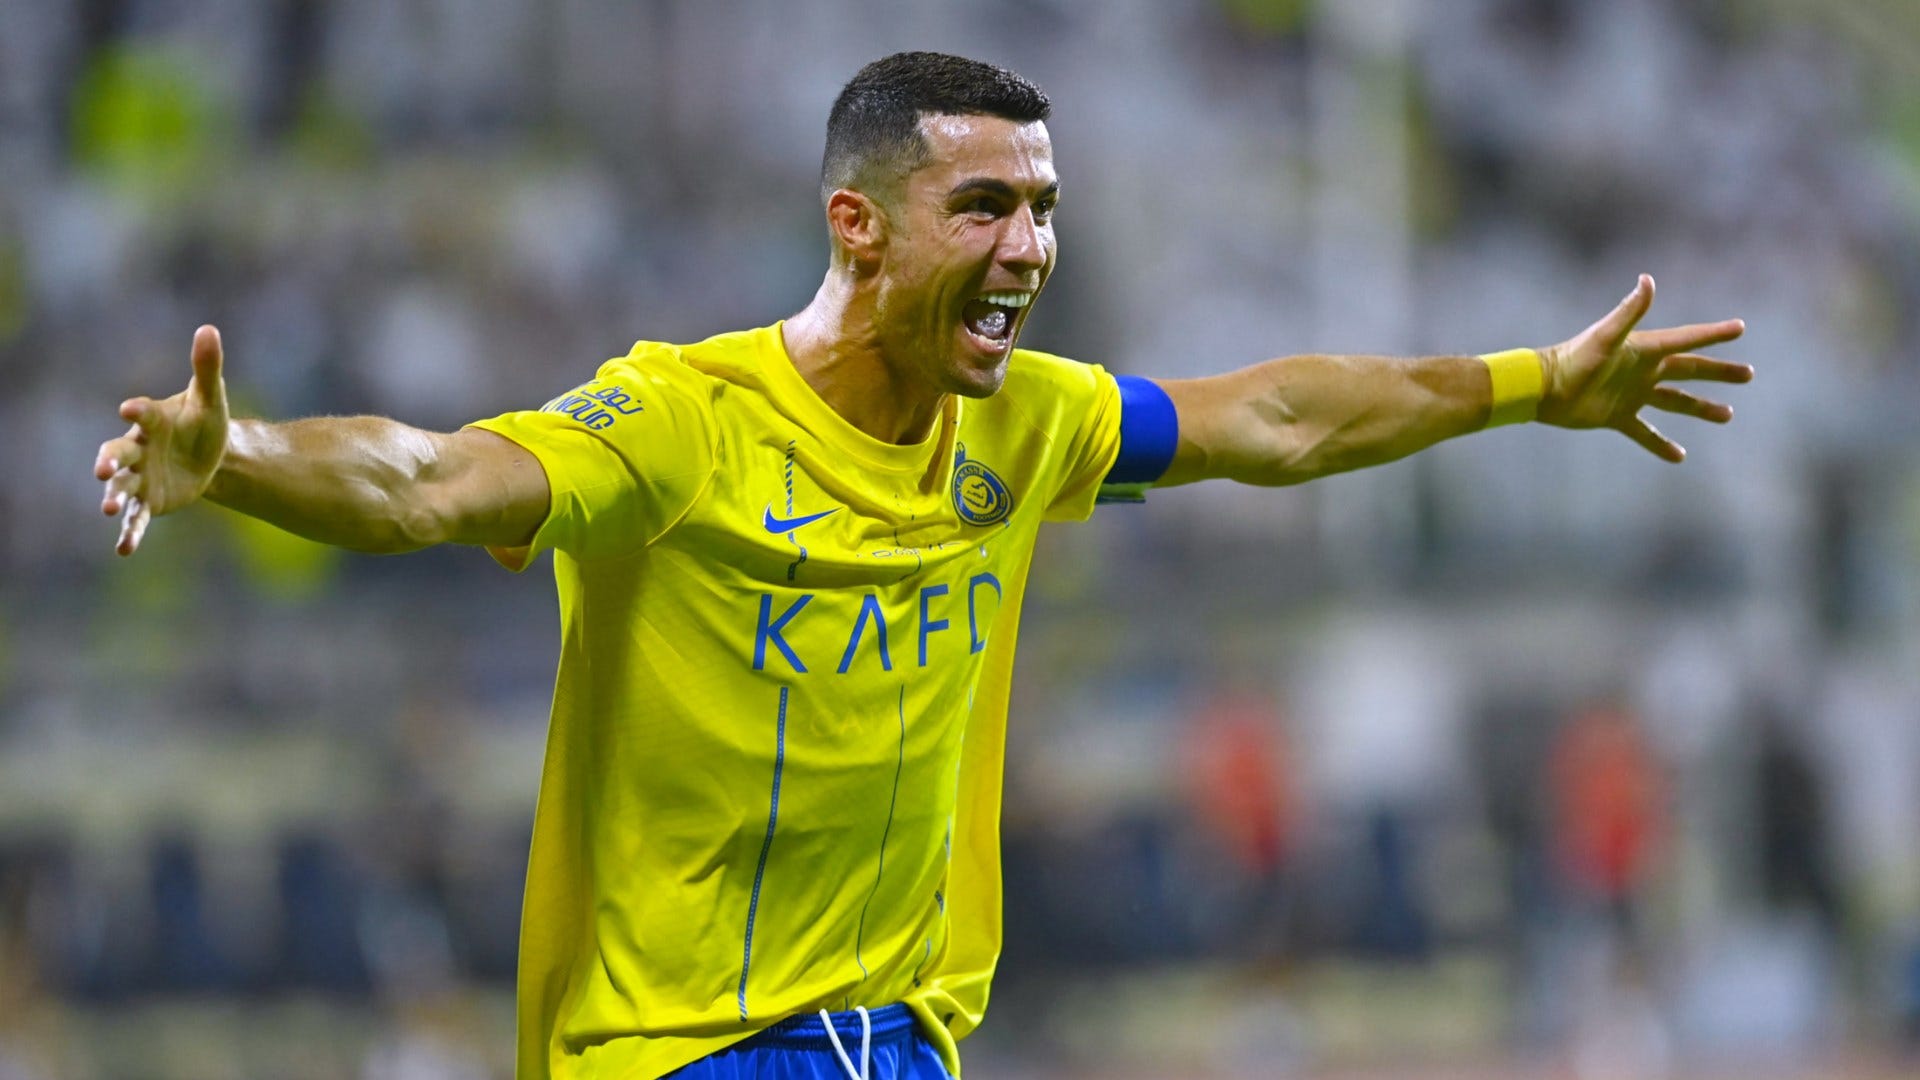 Can Cristiano Ronaldo Play Champions League with Al-Nassr ?